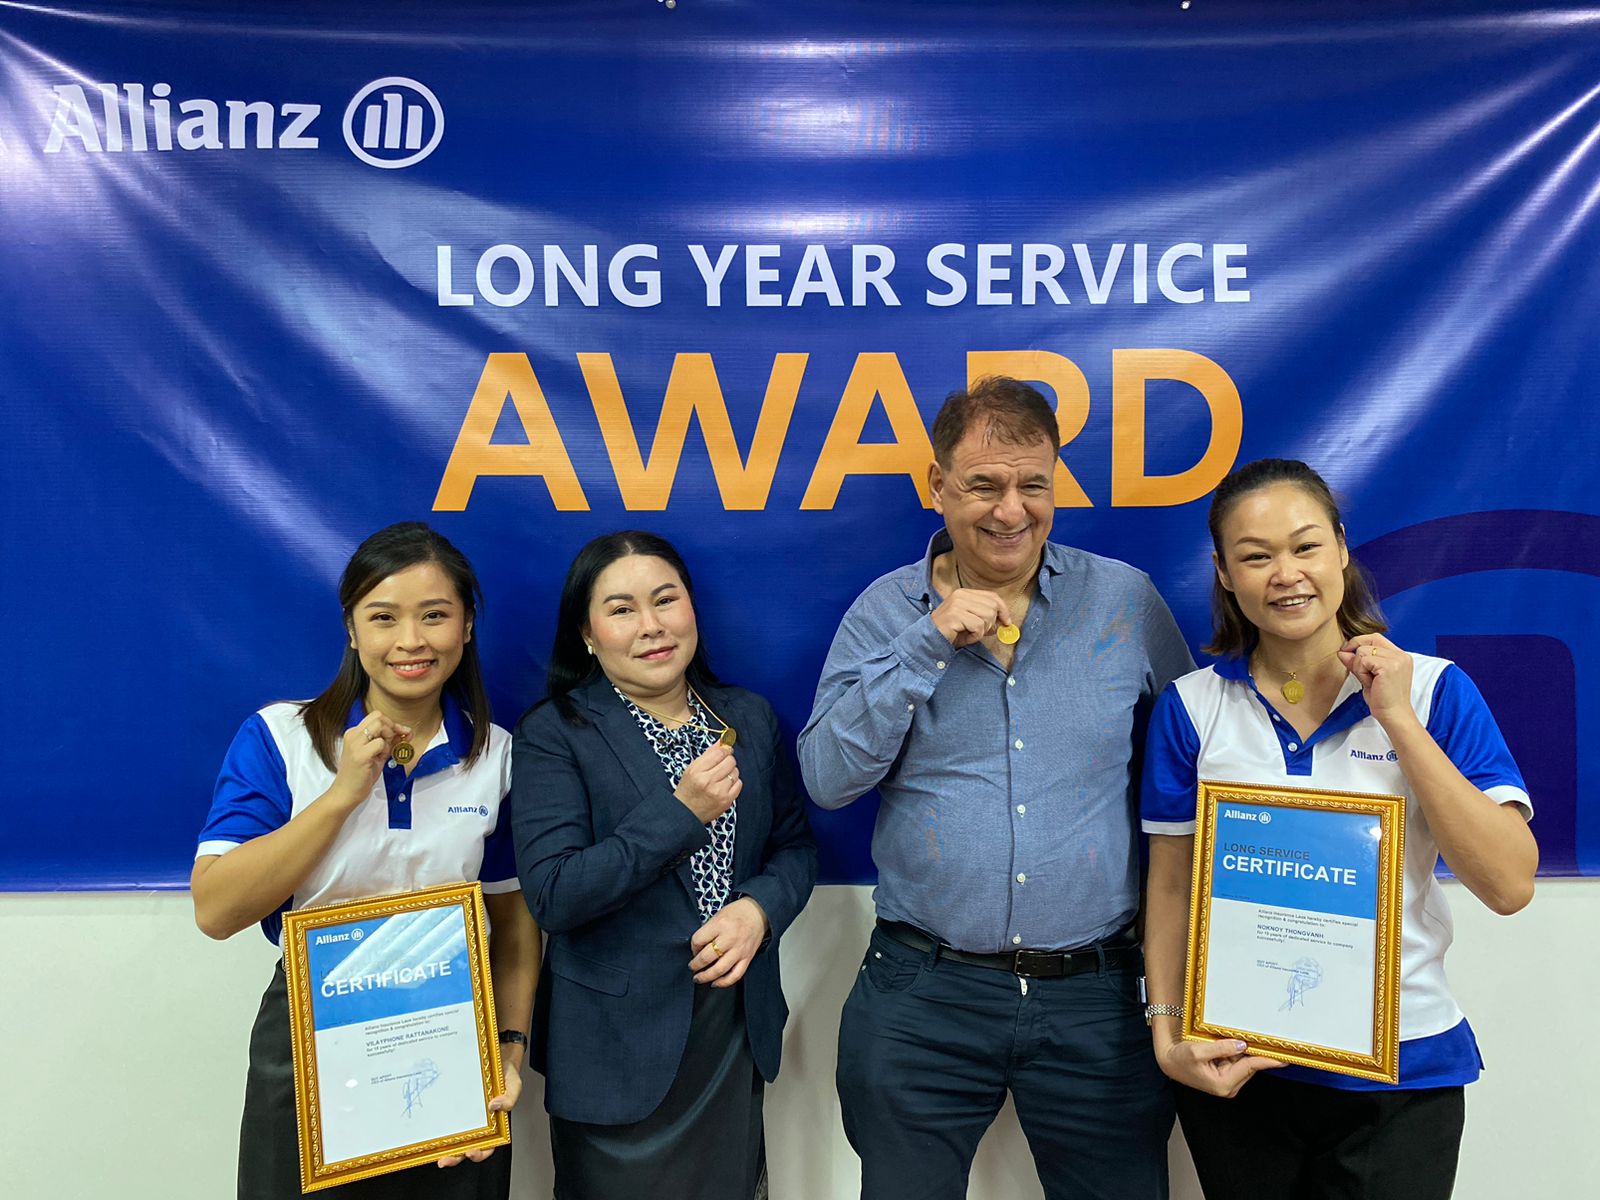 Long-Term Service Award at Allianz Laos